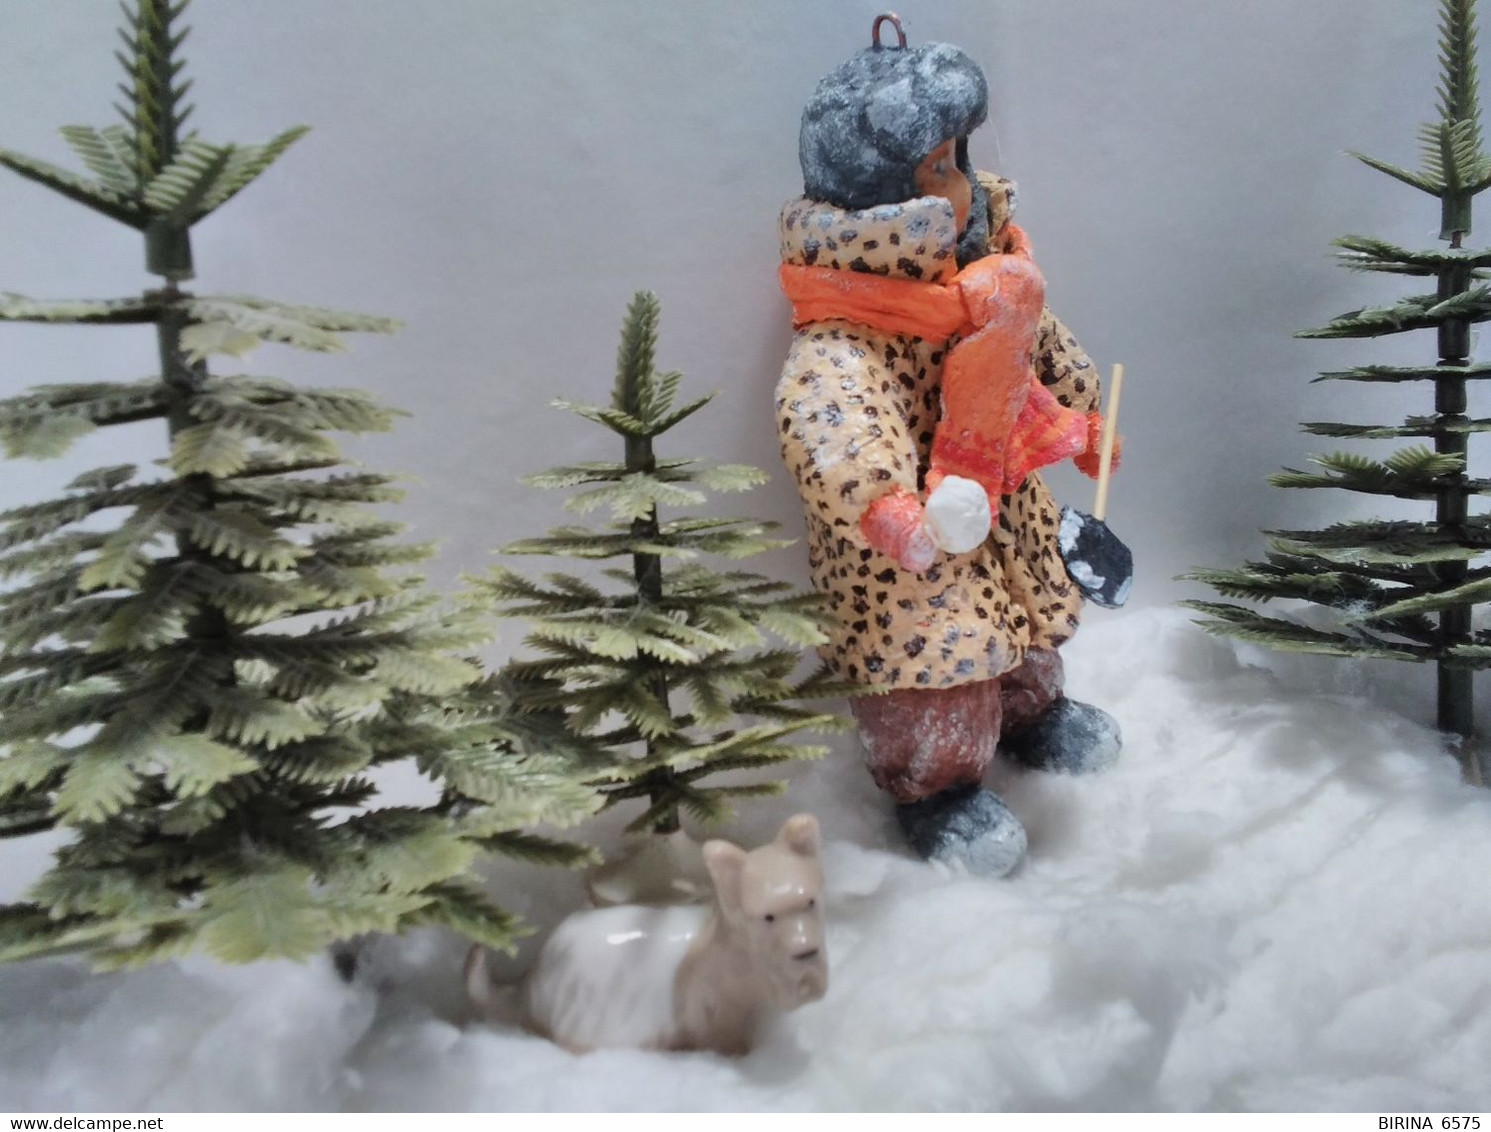 Christmas Tree Toy. Vanyusha On A Walk. From Cotton. 12 Cm. New Year. Christmas. Handmade. - Schmuck Und Dekor